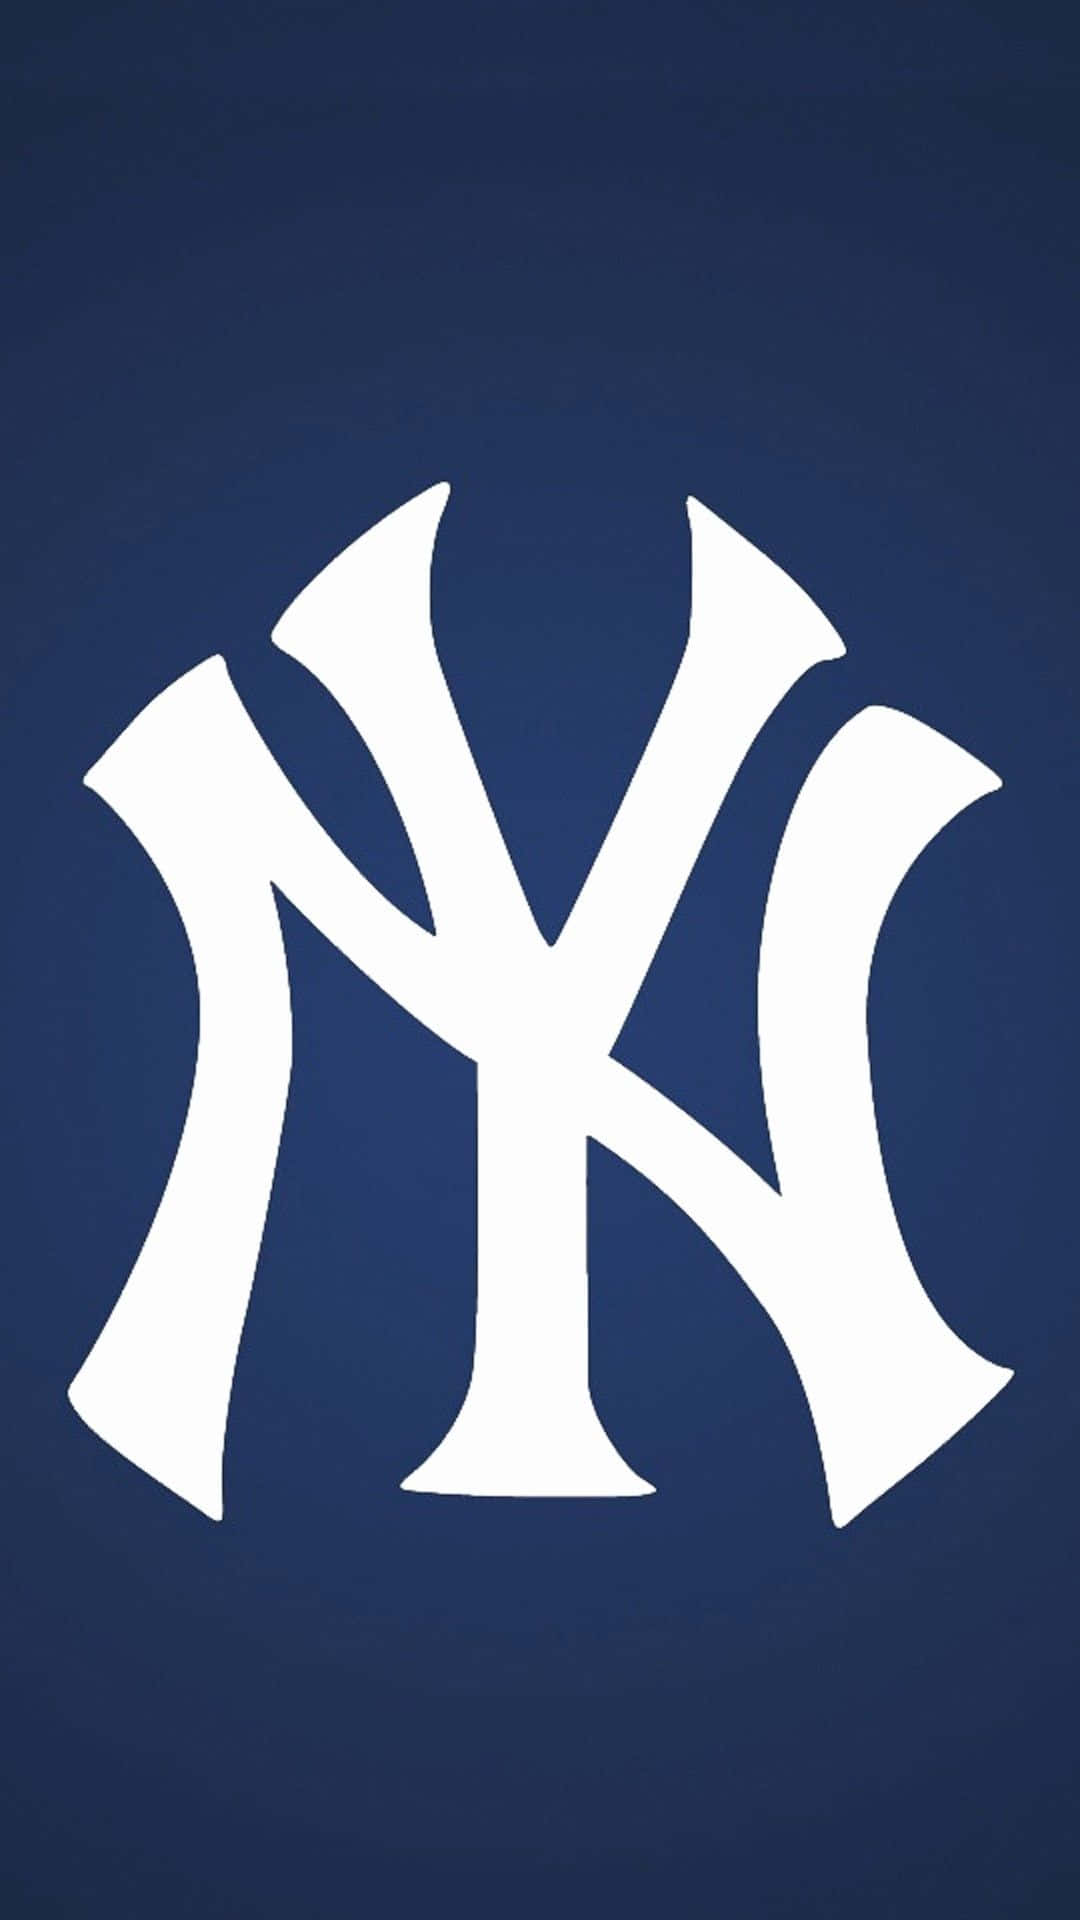 Representeraditt Favoritbasebollag Med En Yankees-temad Iphone-skal. Wallpaper